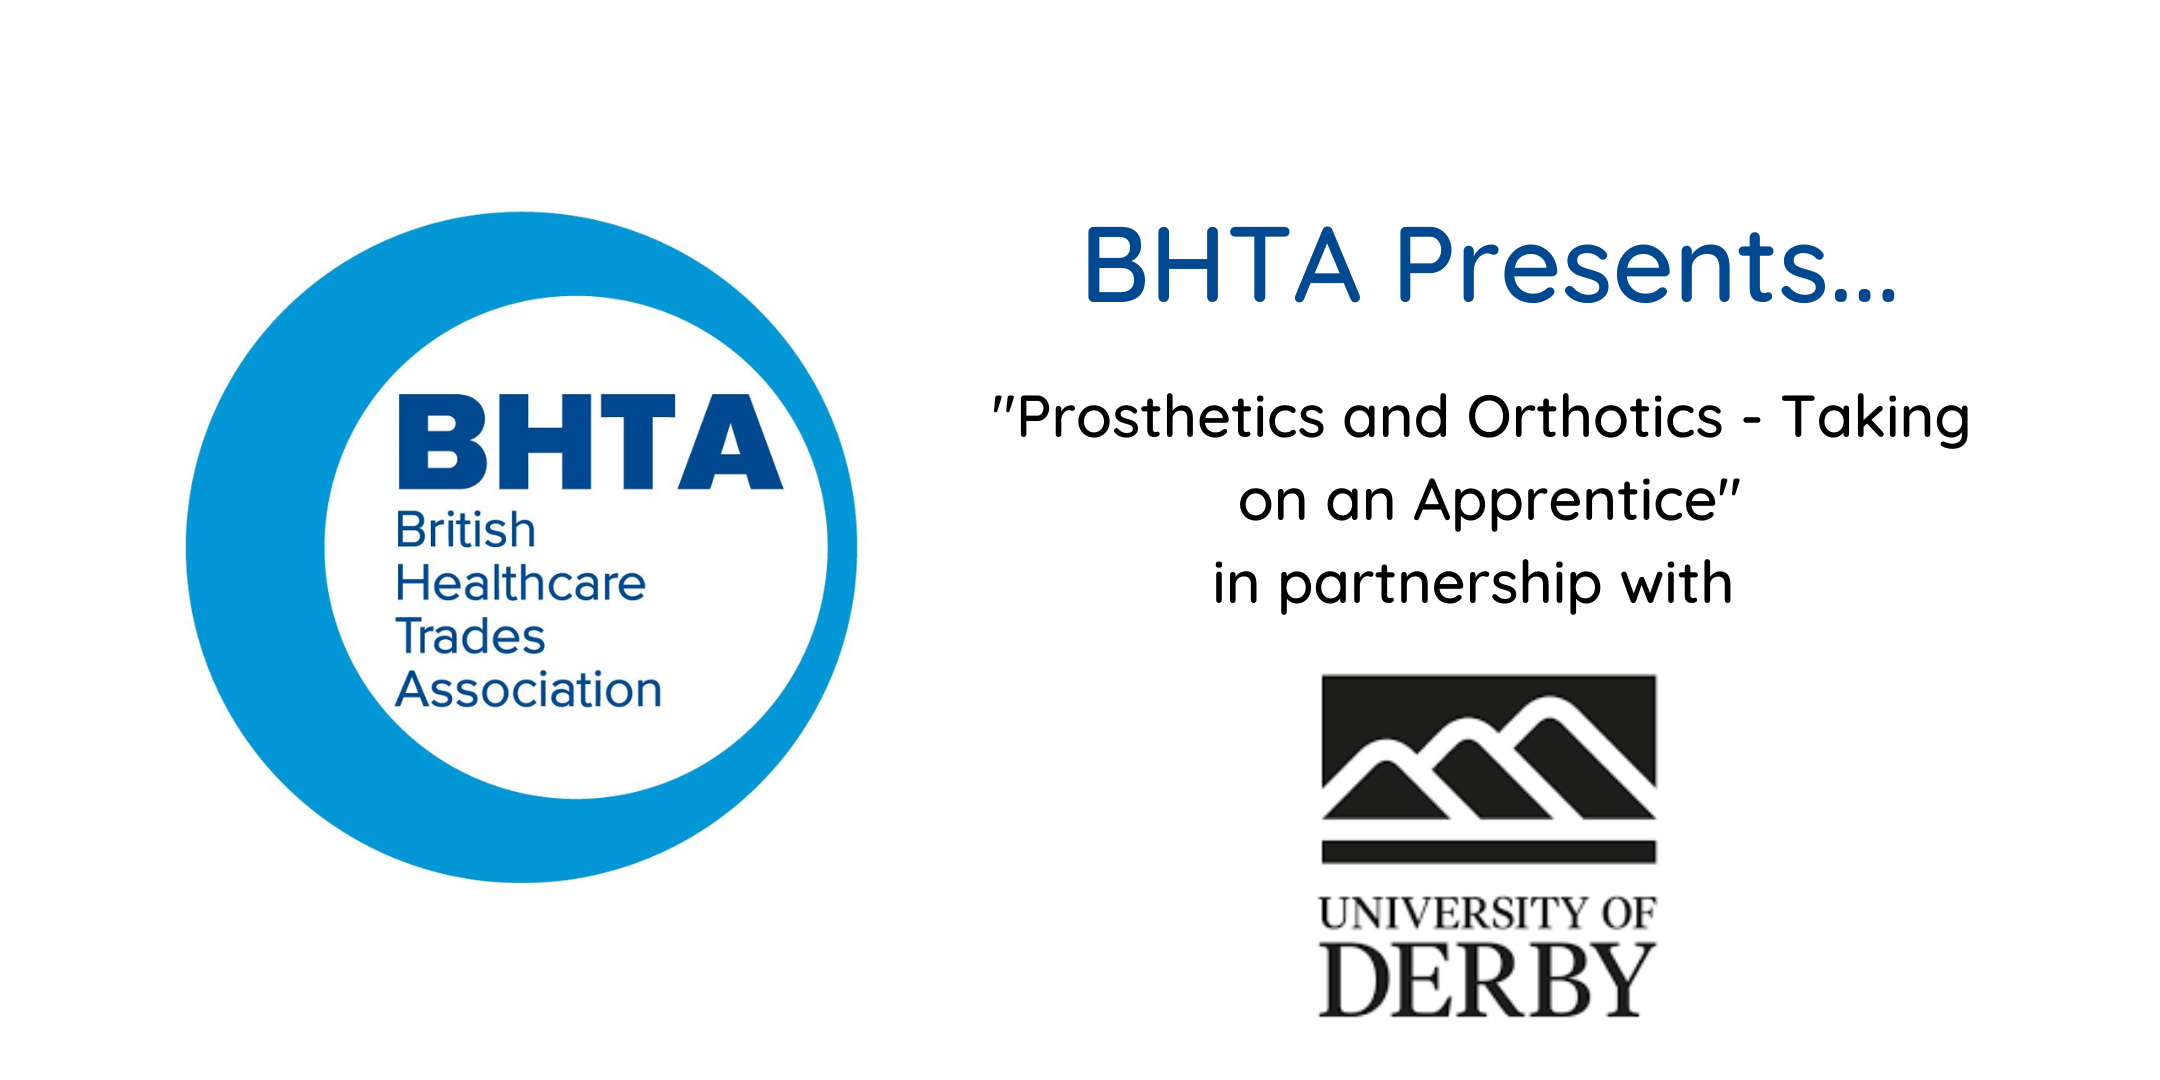 BHTA presents… “Orthotics and Prosthetics – Taking on an Apprentice”